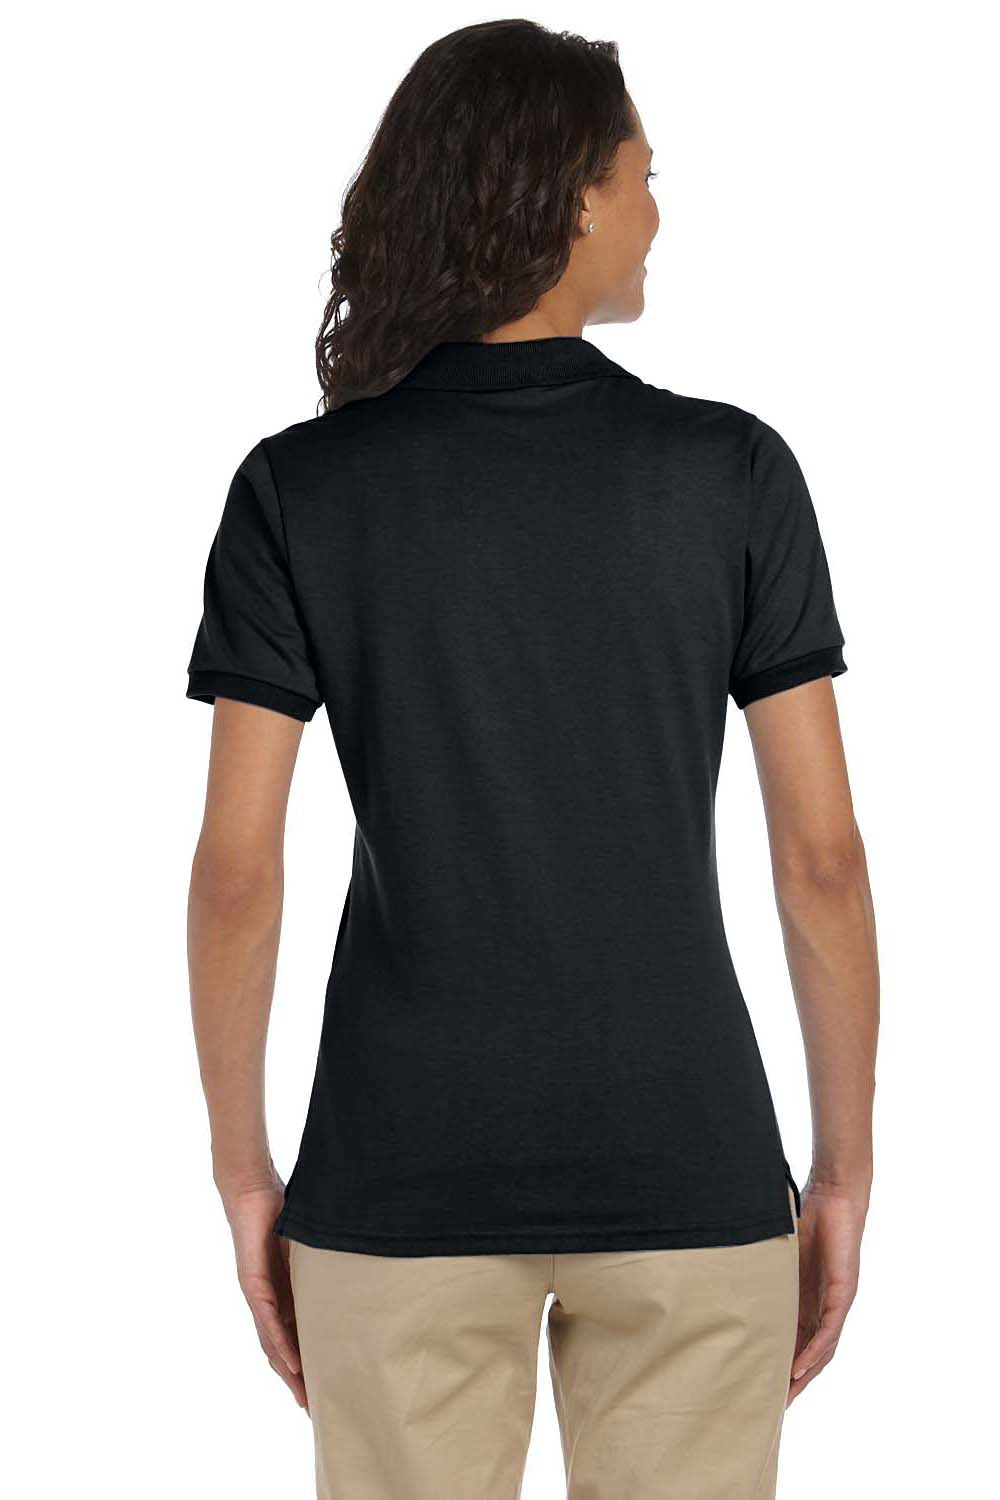 Jerzees 437W Womens SpotShield Stain Resistant Short Sleeve Polo Shirt Black Back